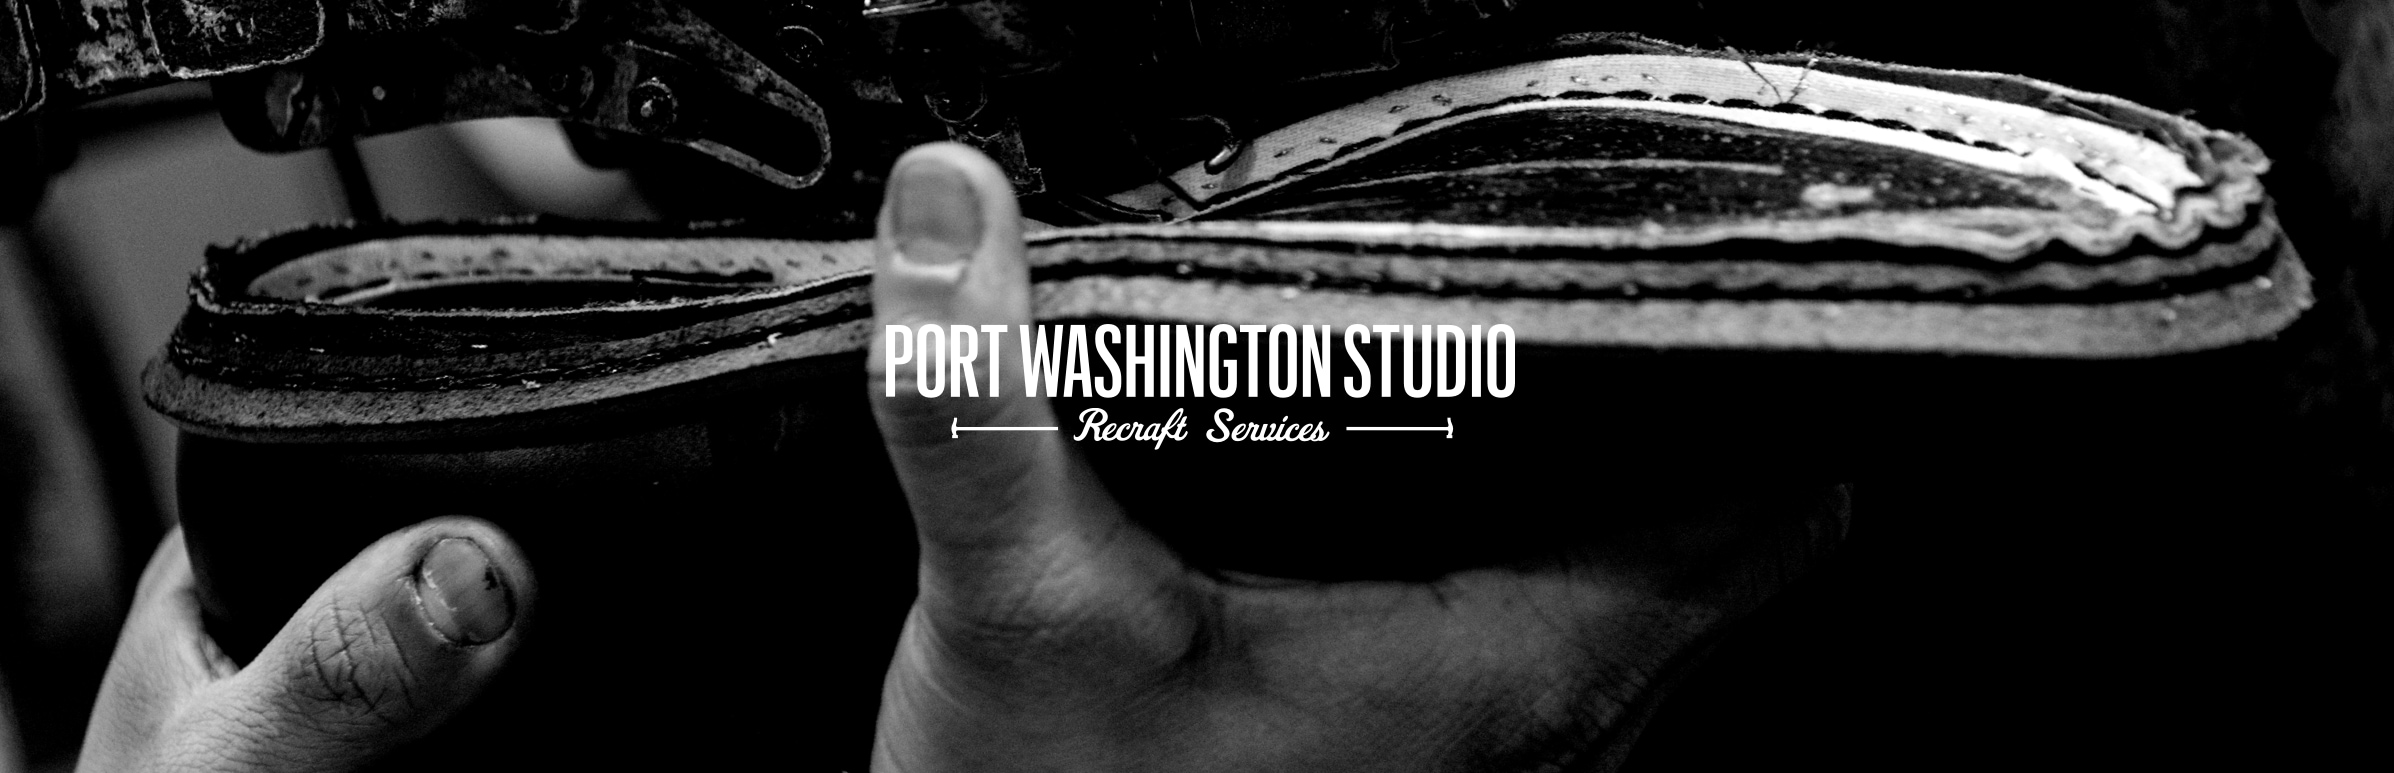 port washington studio recraft services